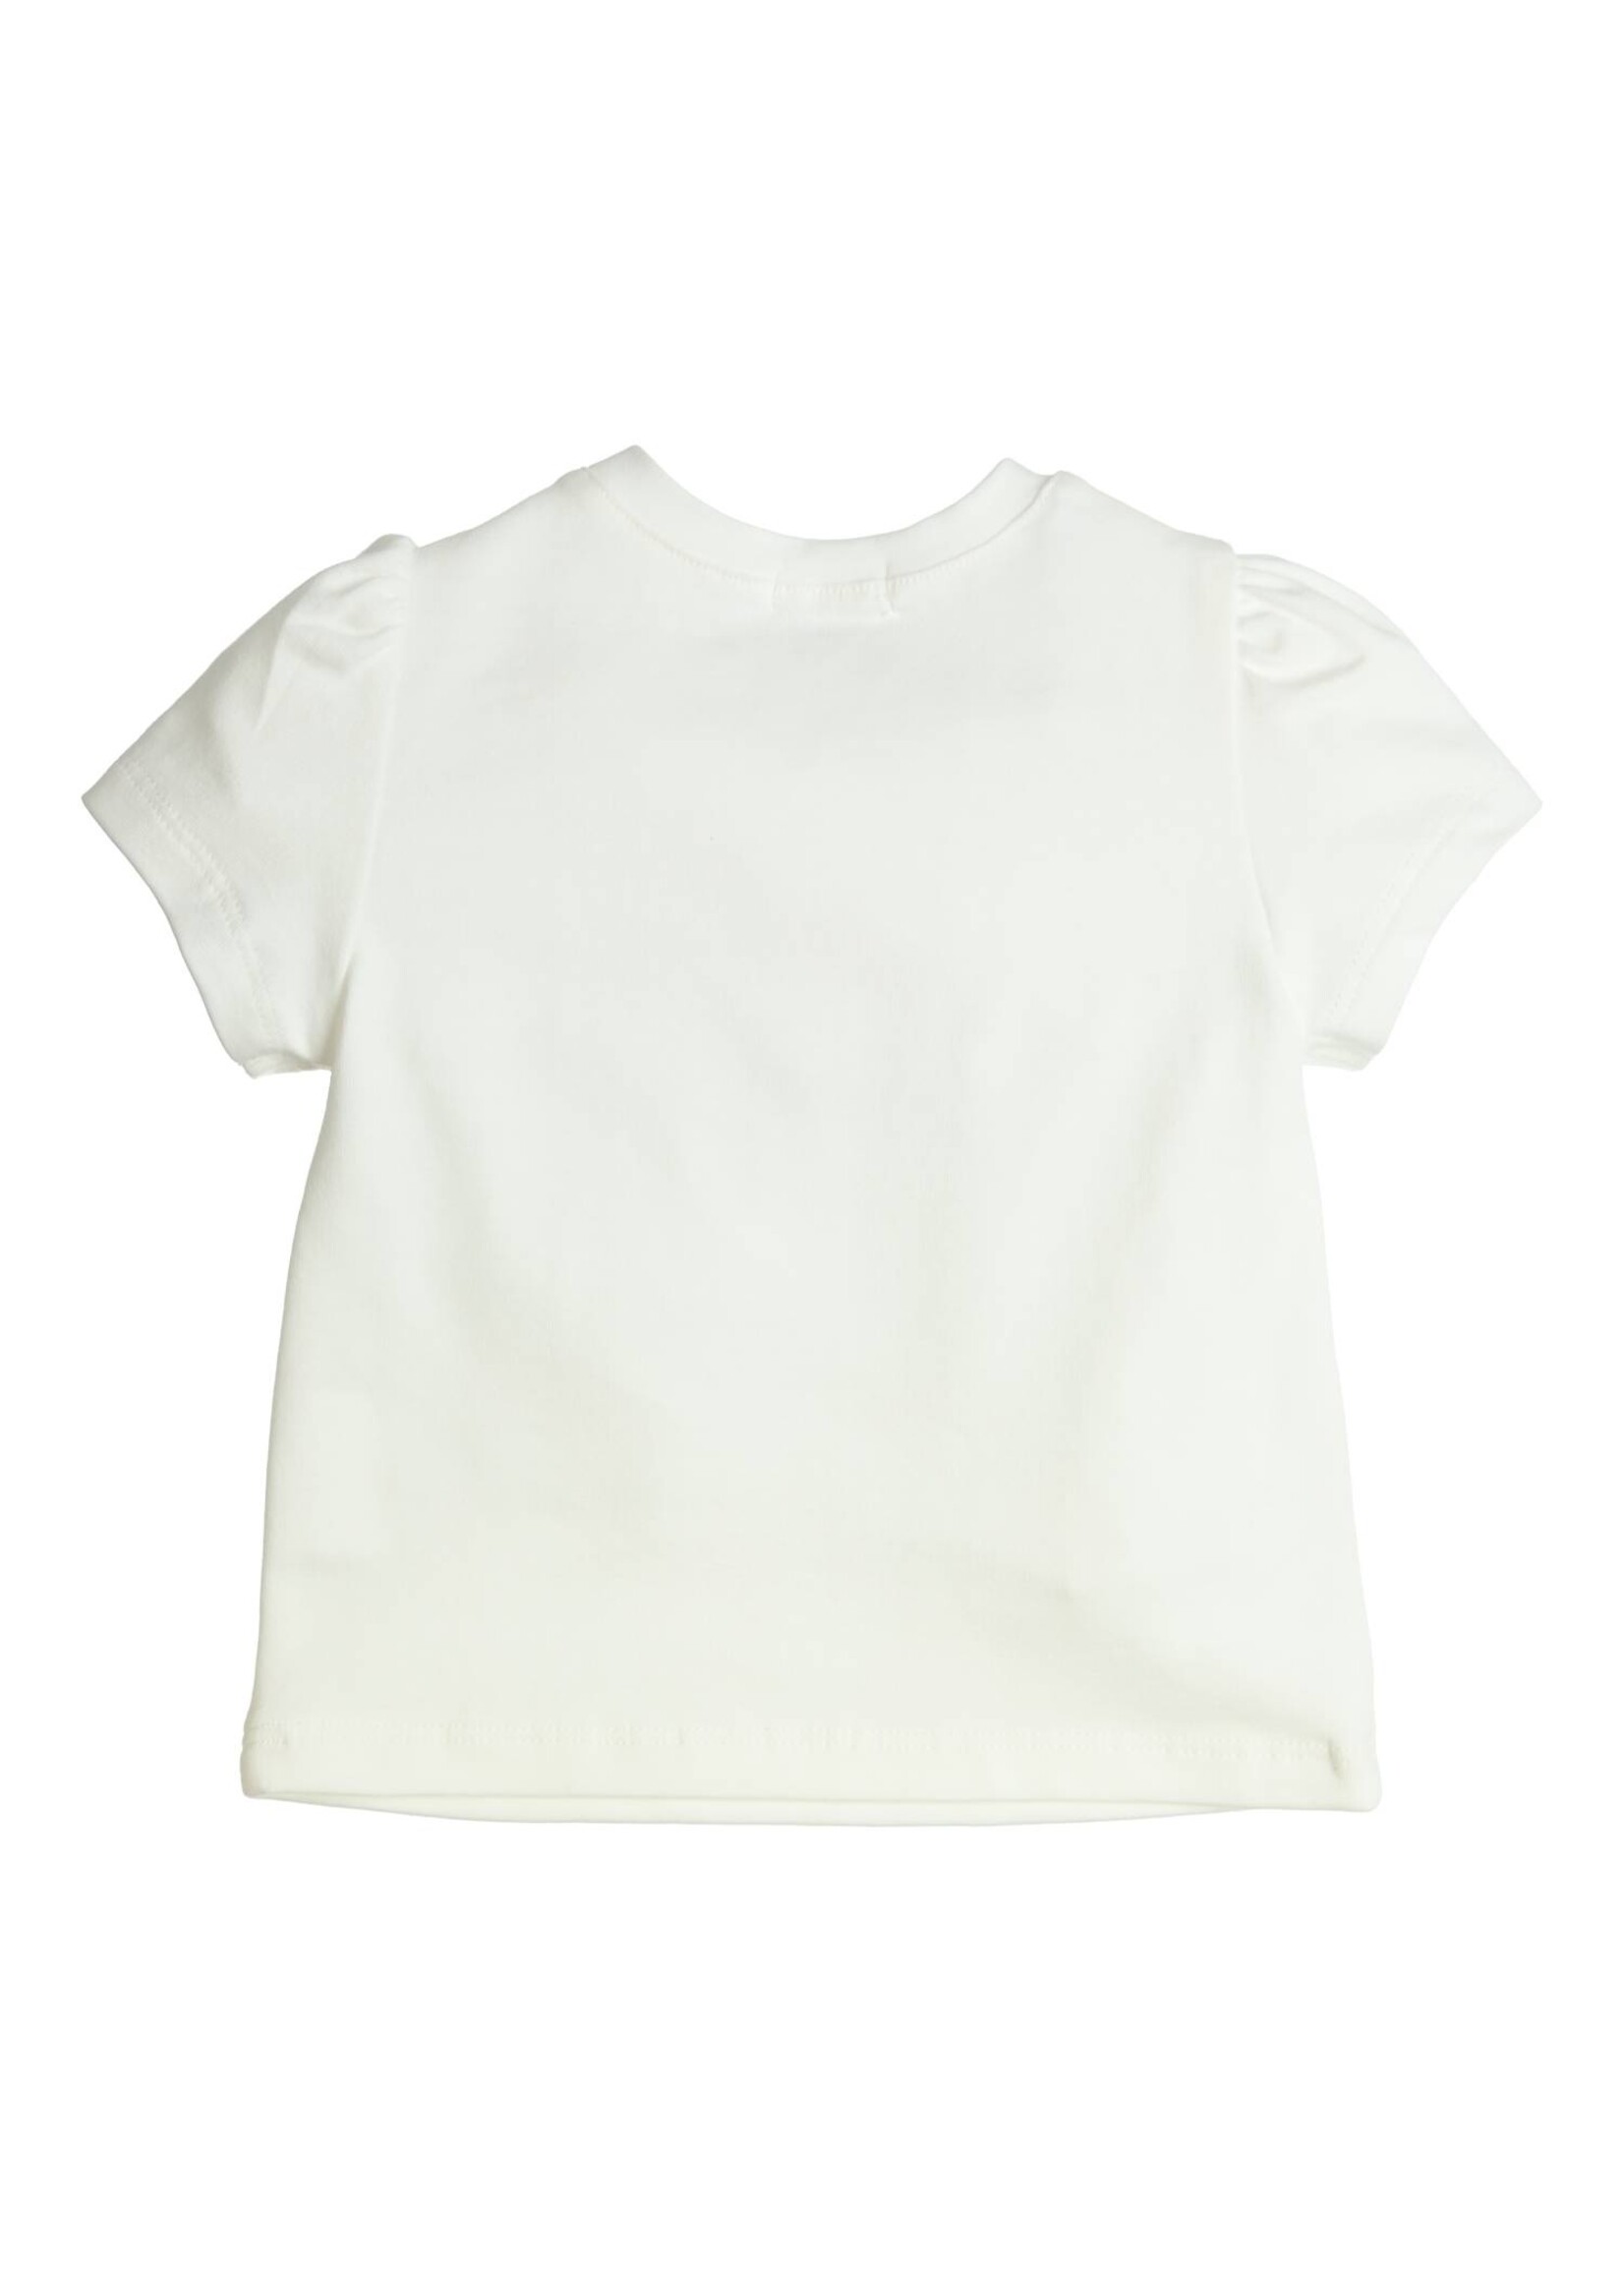 Gymp Girls T-shirt Aerobic Snuggling Ducklings 353-4260-10 Off White - Orange